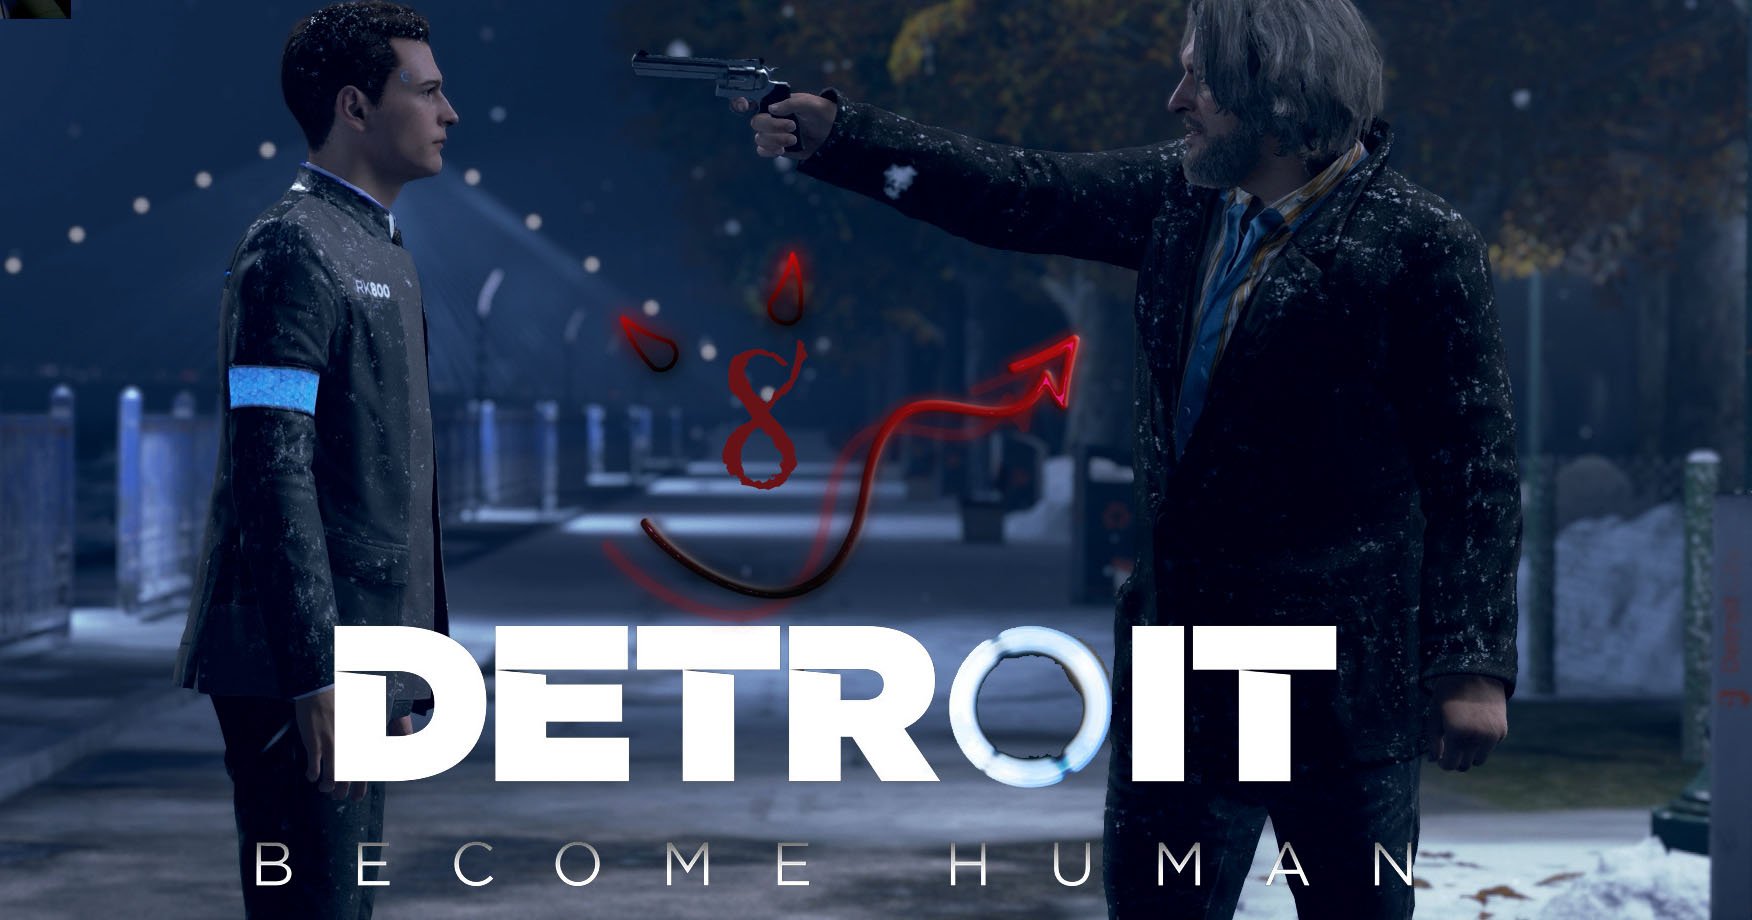 Detroit  Become Human ❤ 8 серия ❤  Причина пьянства Хэнка раскрыта! Он философ...